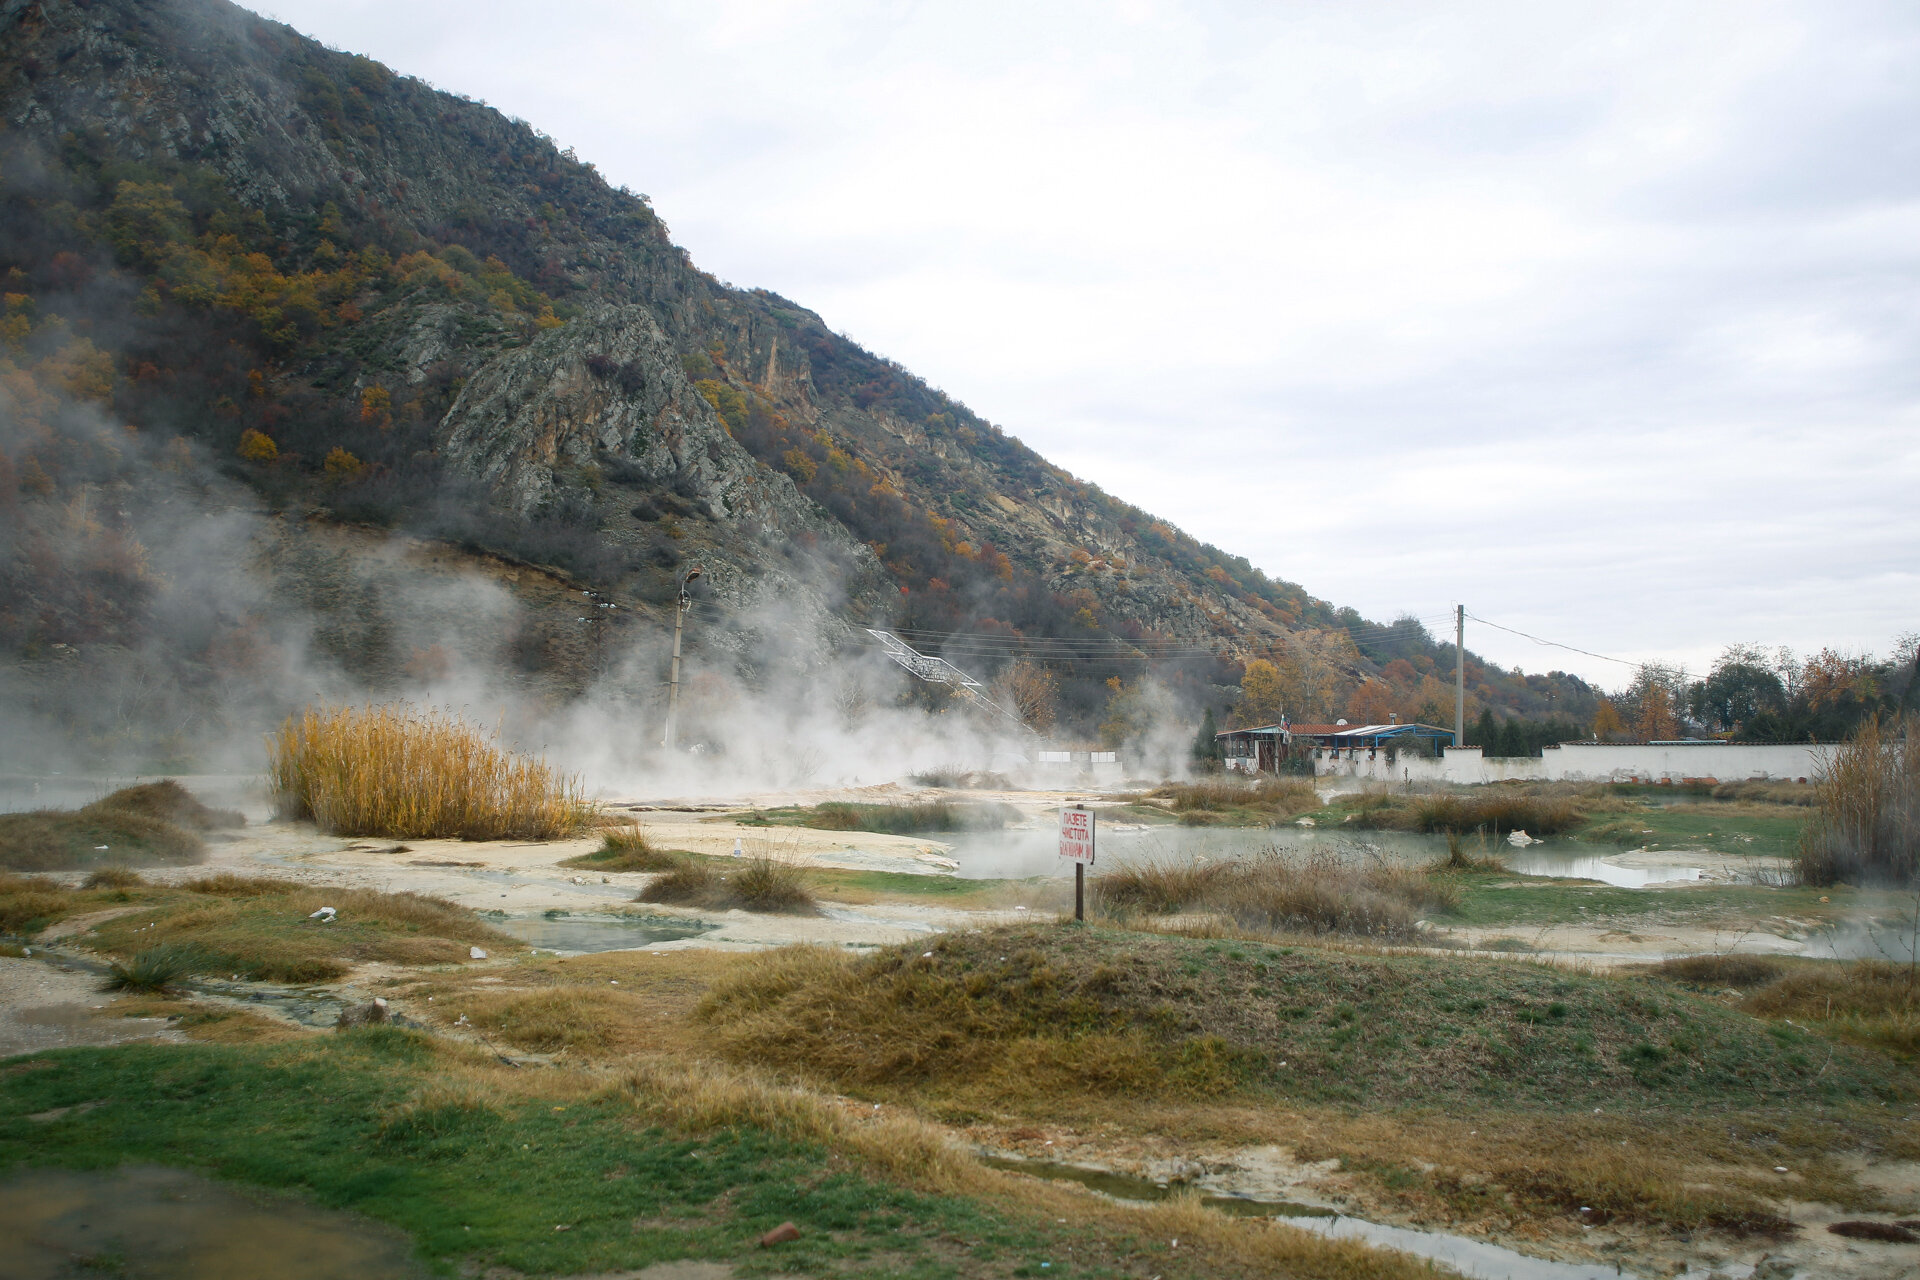 Europe's Best Free Natural Wild Hot Springs Thermal Baths - Rupite in Bulgaria